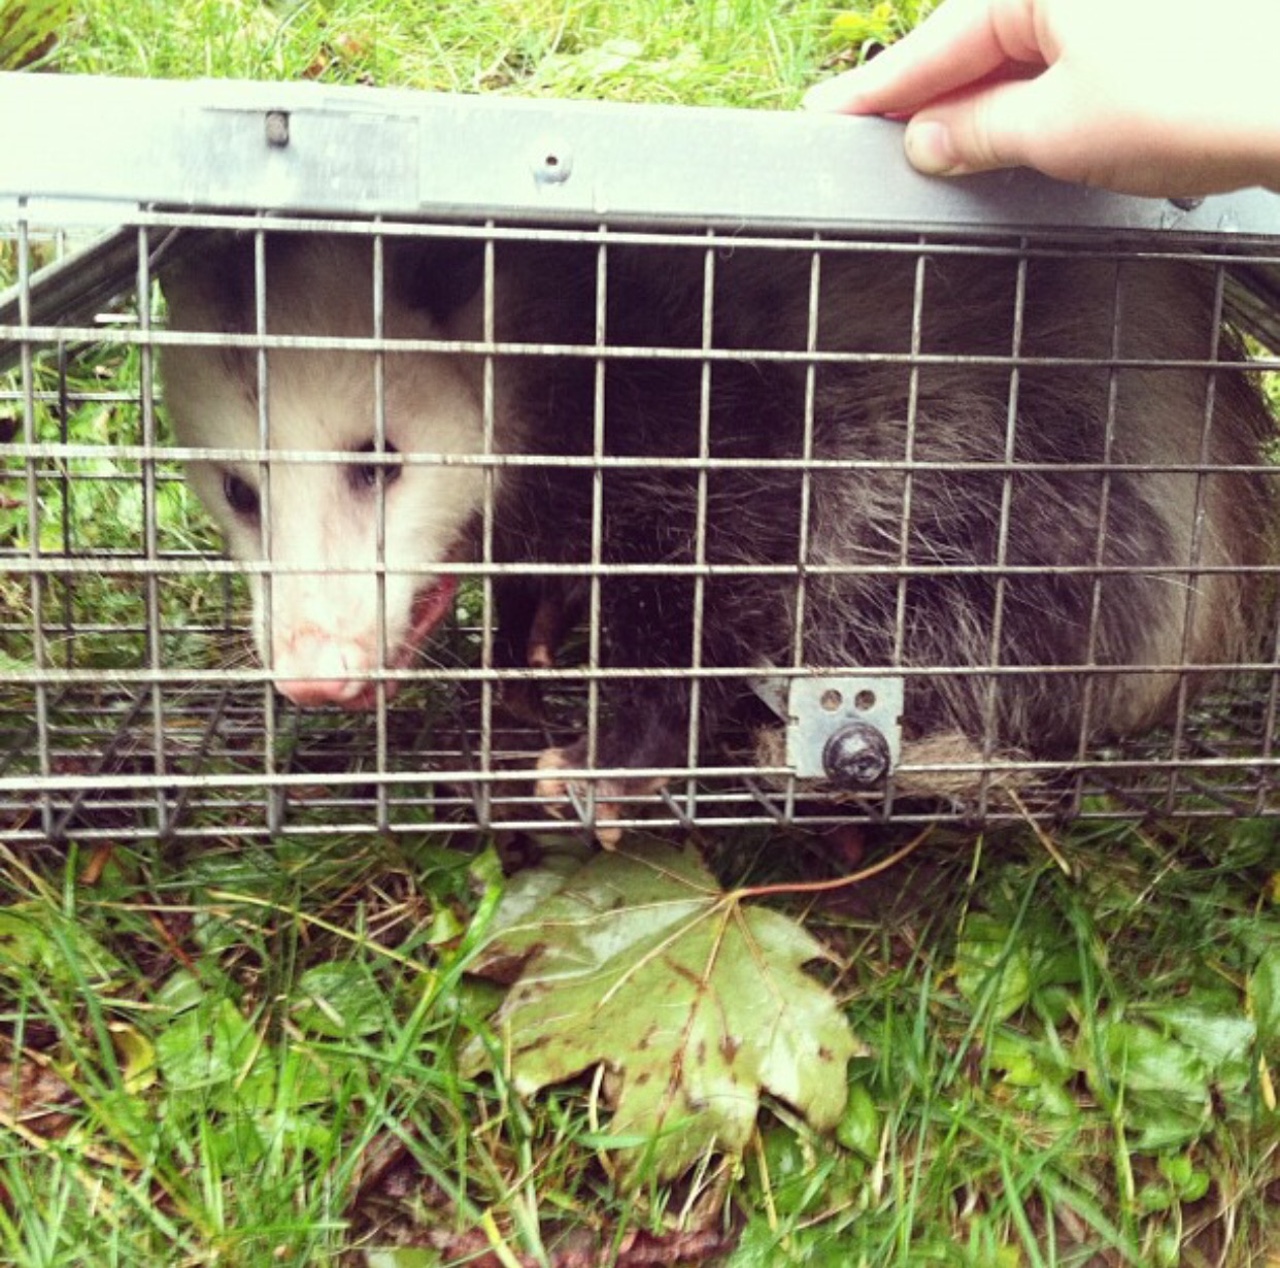 wildlife removal control opossum